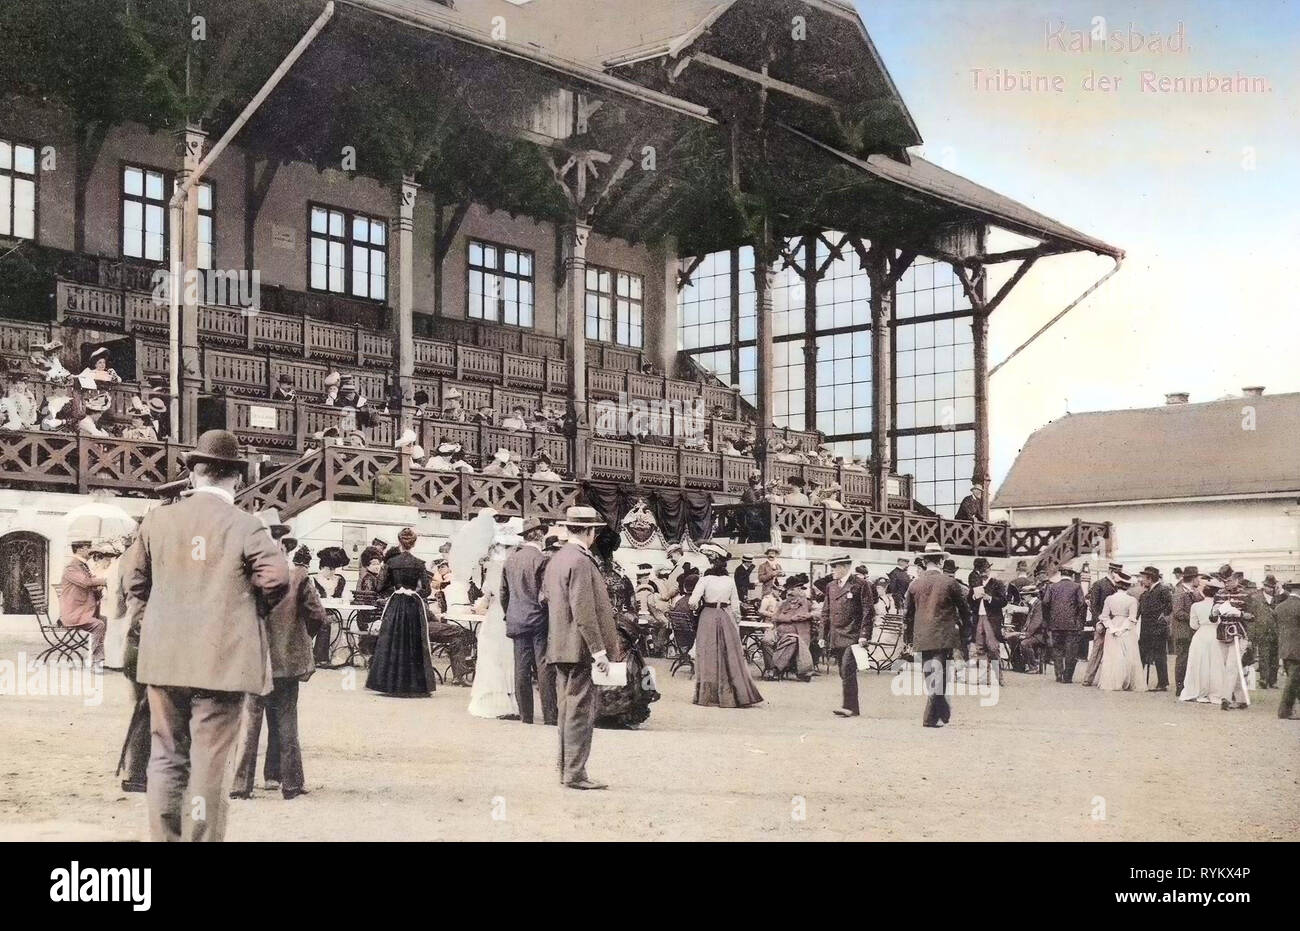 Racecourse a Karlovy Vary, 1902, Regione di Karlovy Vary, Karlsbad, Tribüne der Rennbahn, Repubblica Ceca Foto Stock